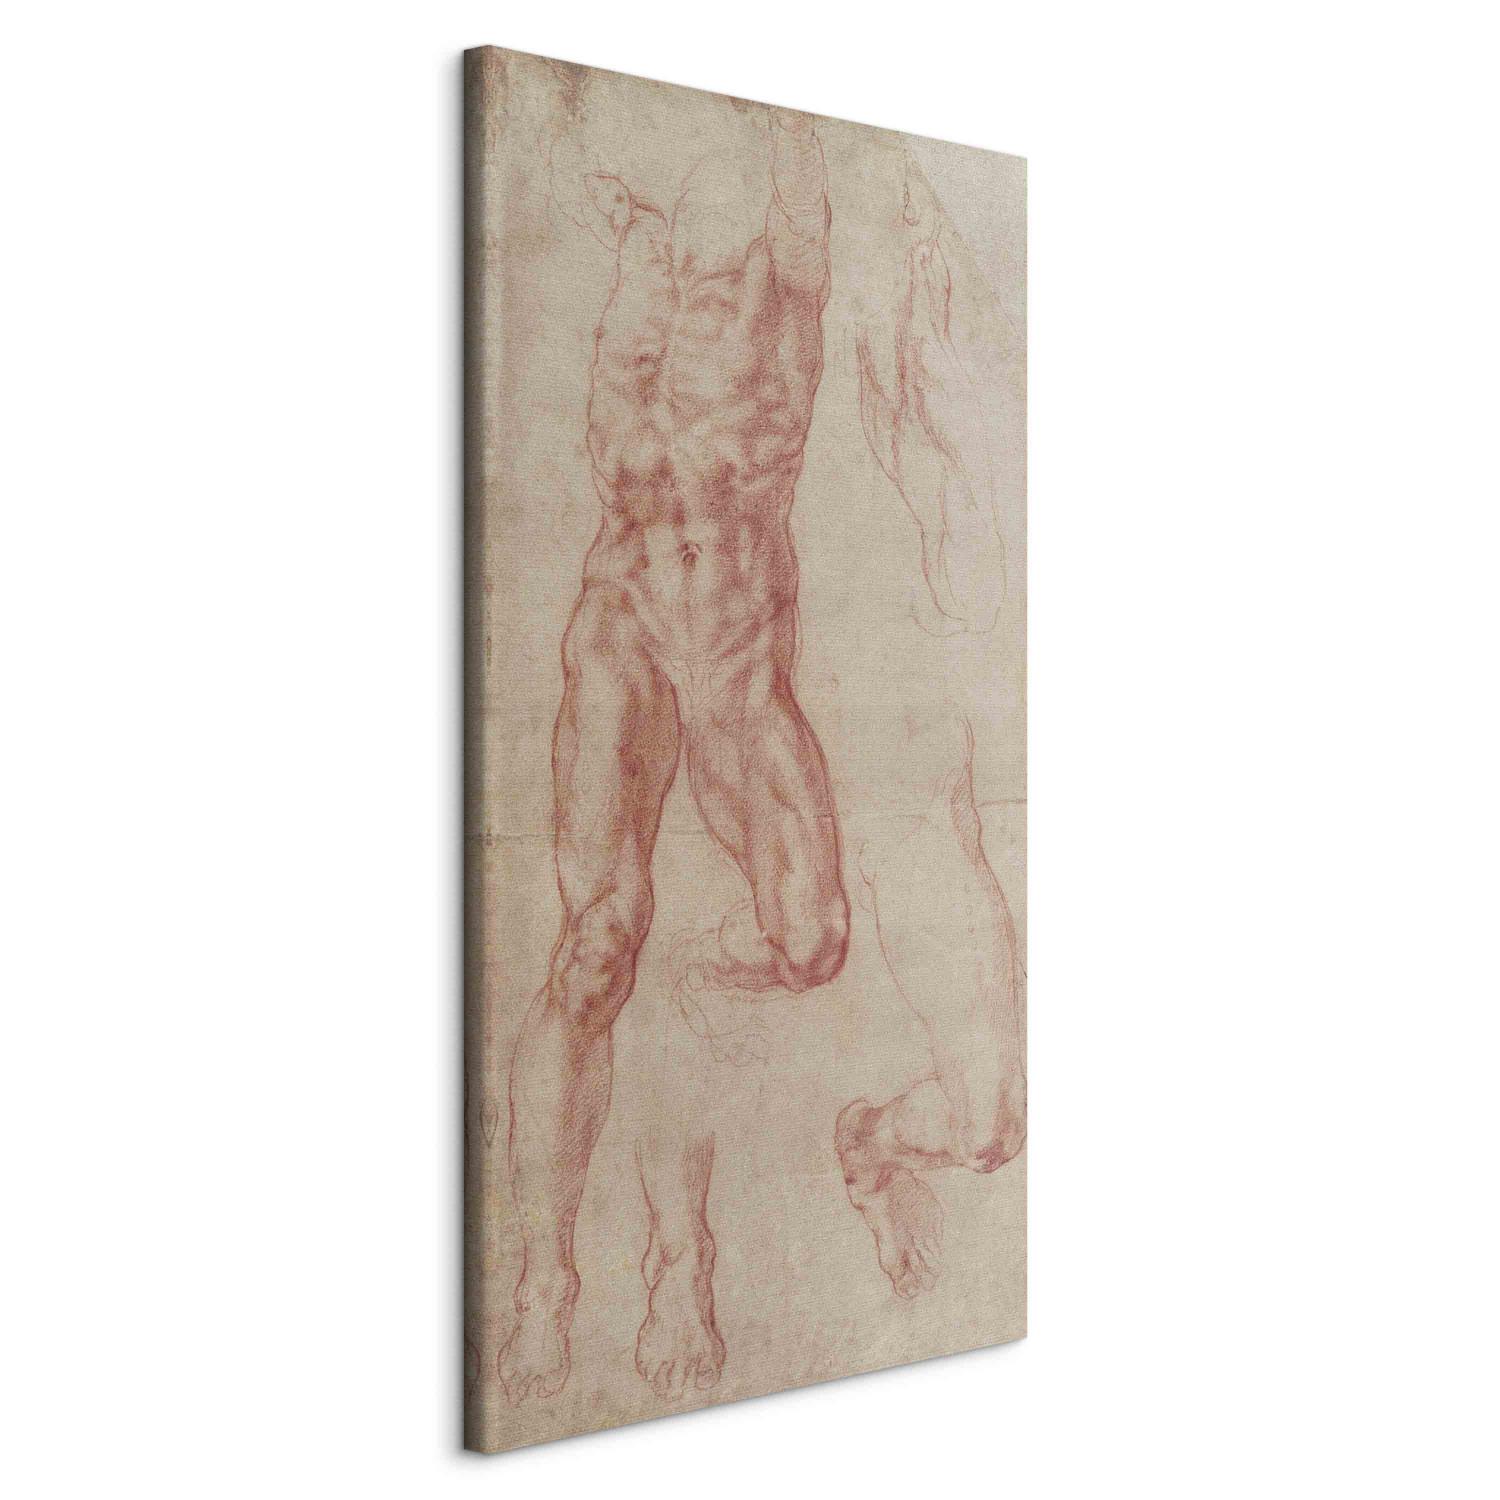 Reproducción de cuadro Study of a crucified man (Haman) with separate leg and foot studies